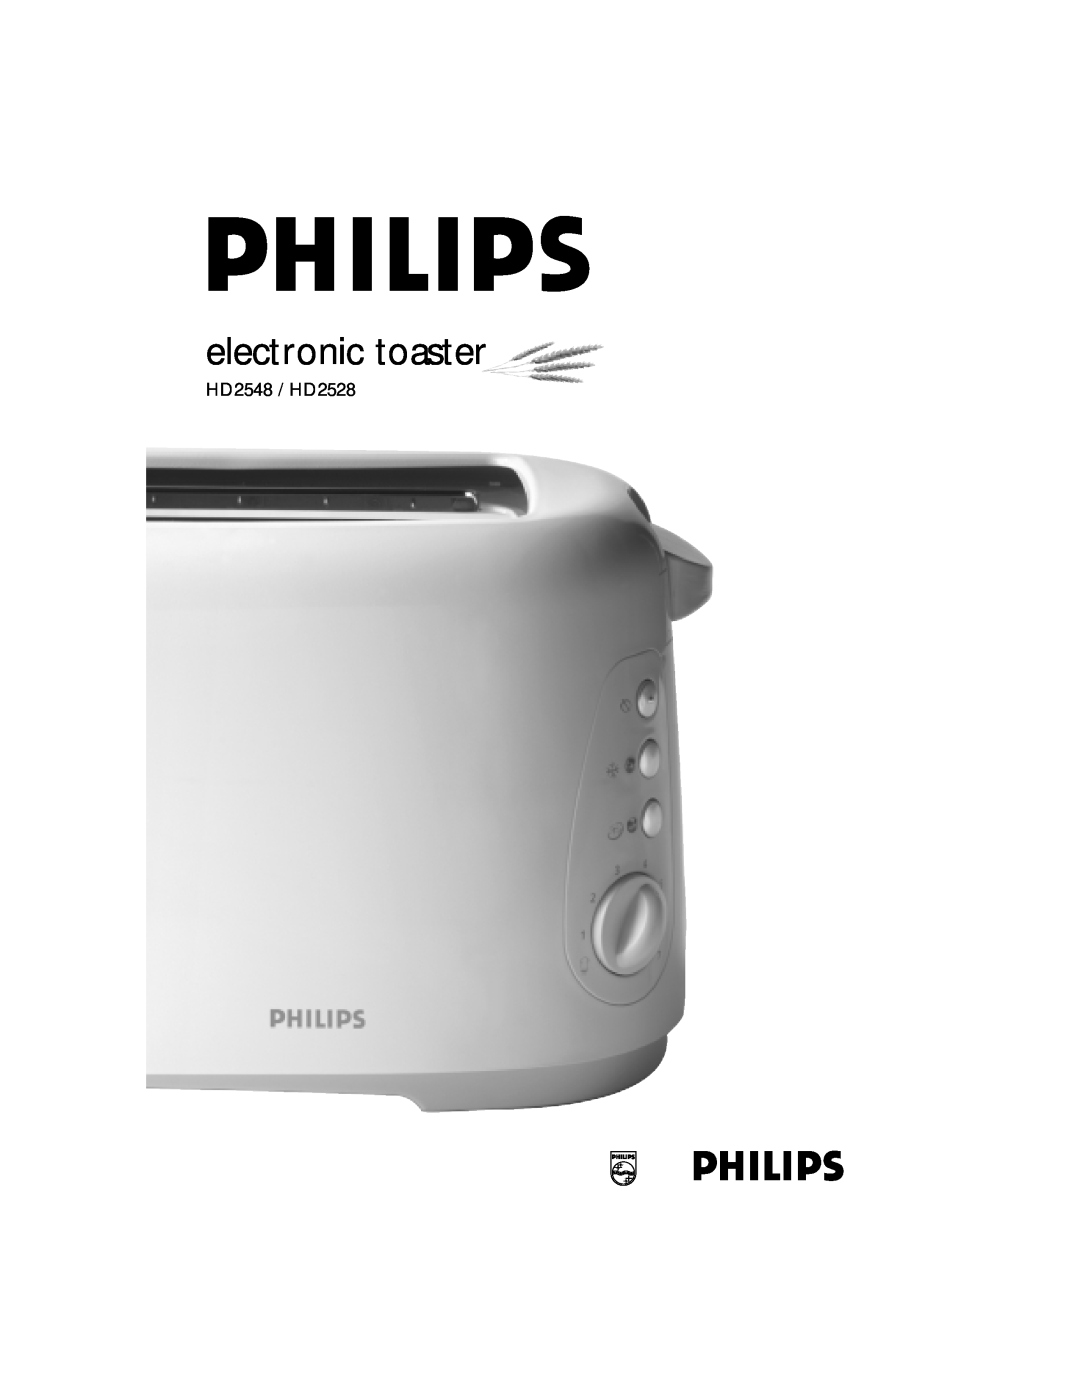 Philips manual electronic toaster, HD2548 / HD2528 